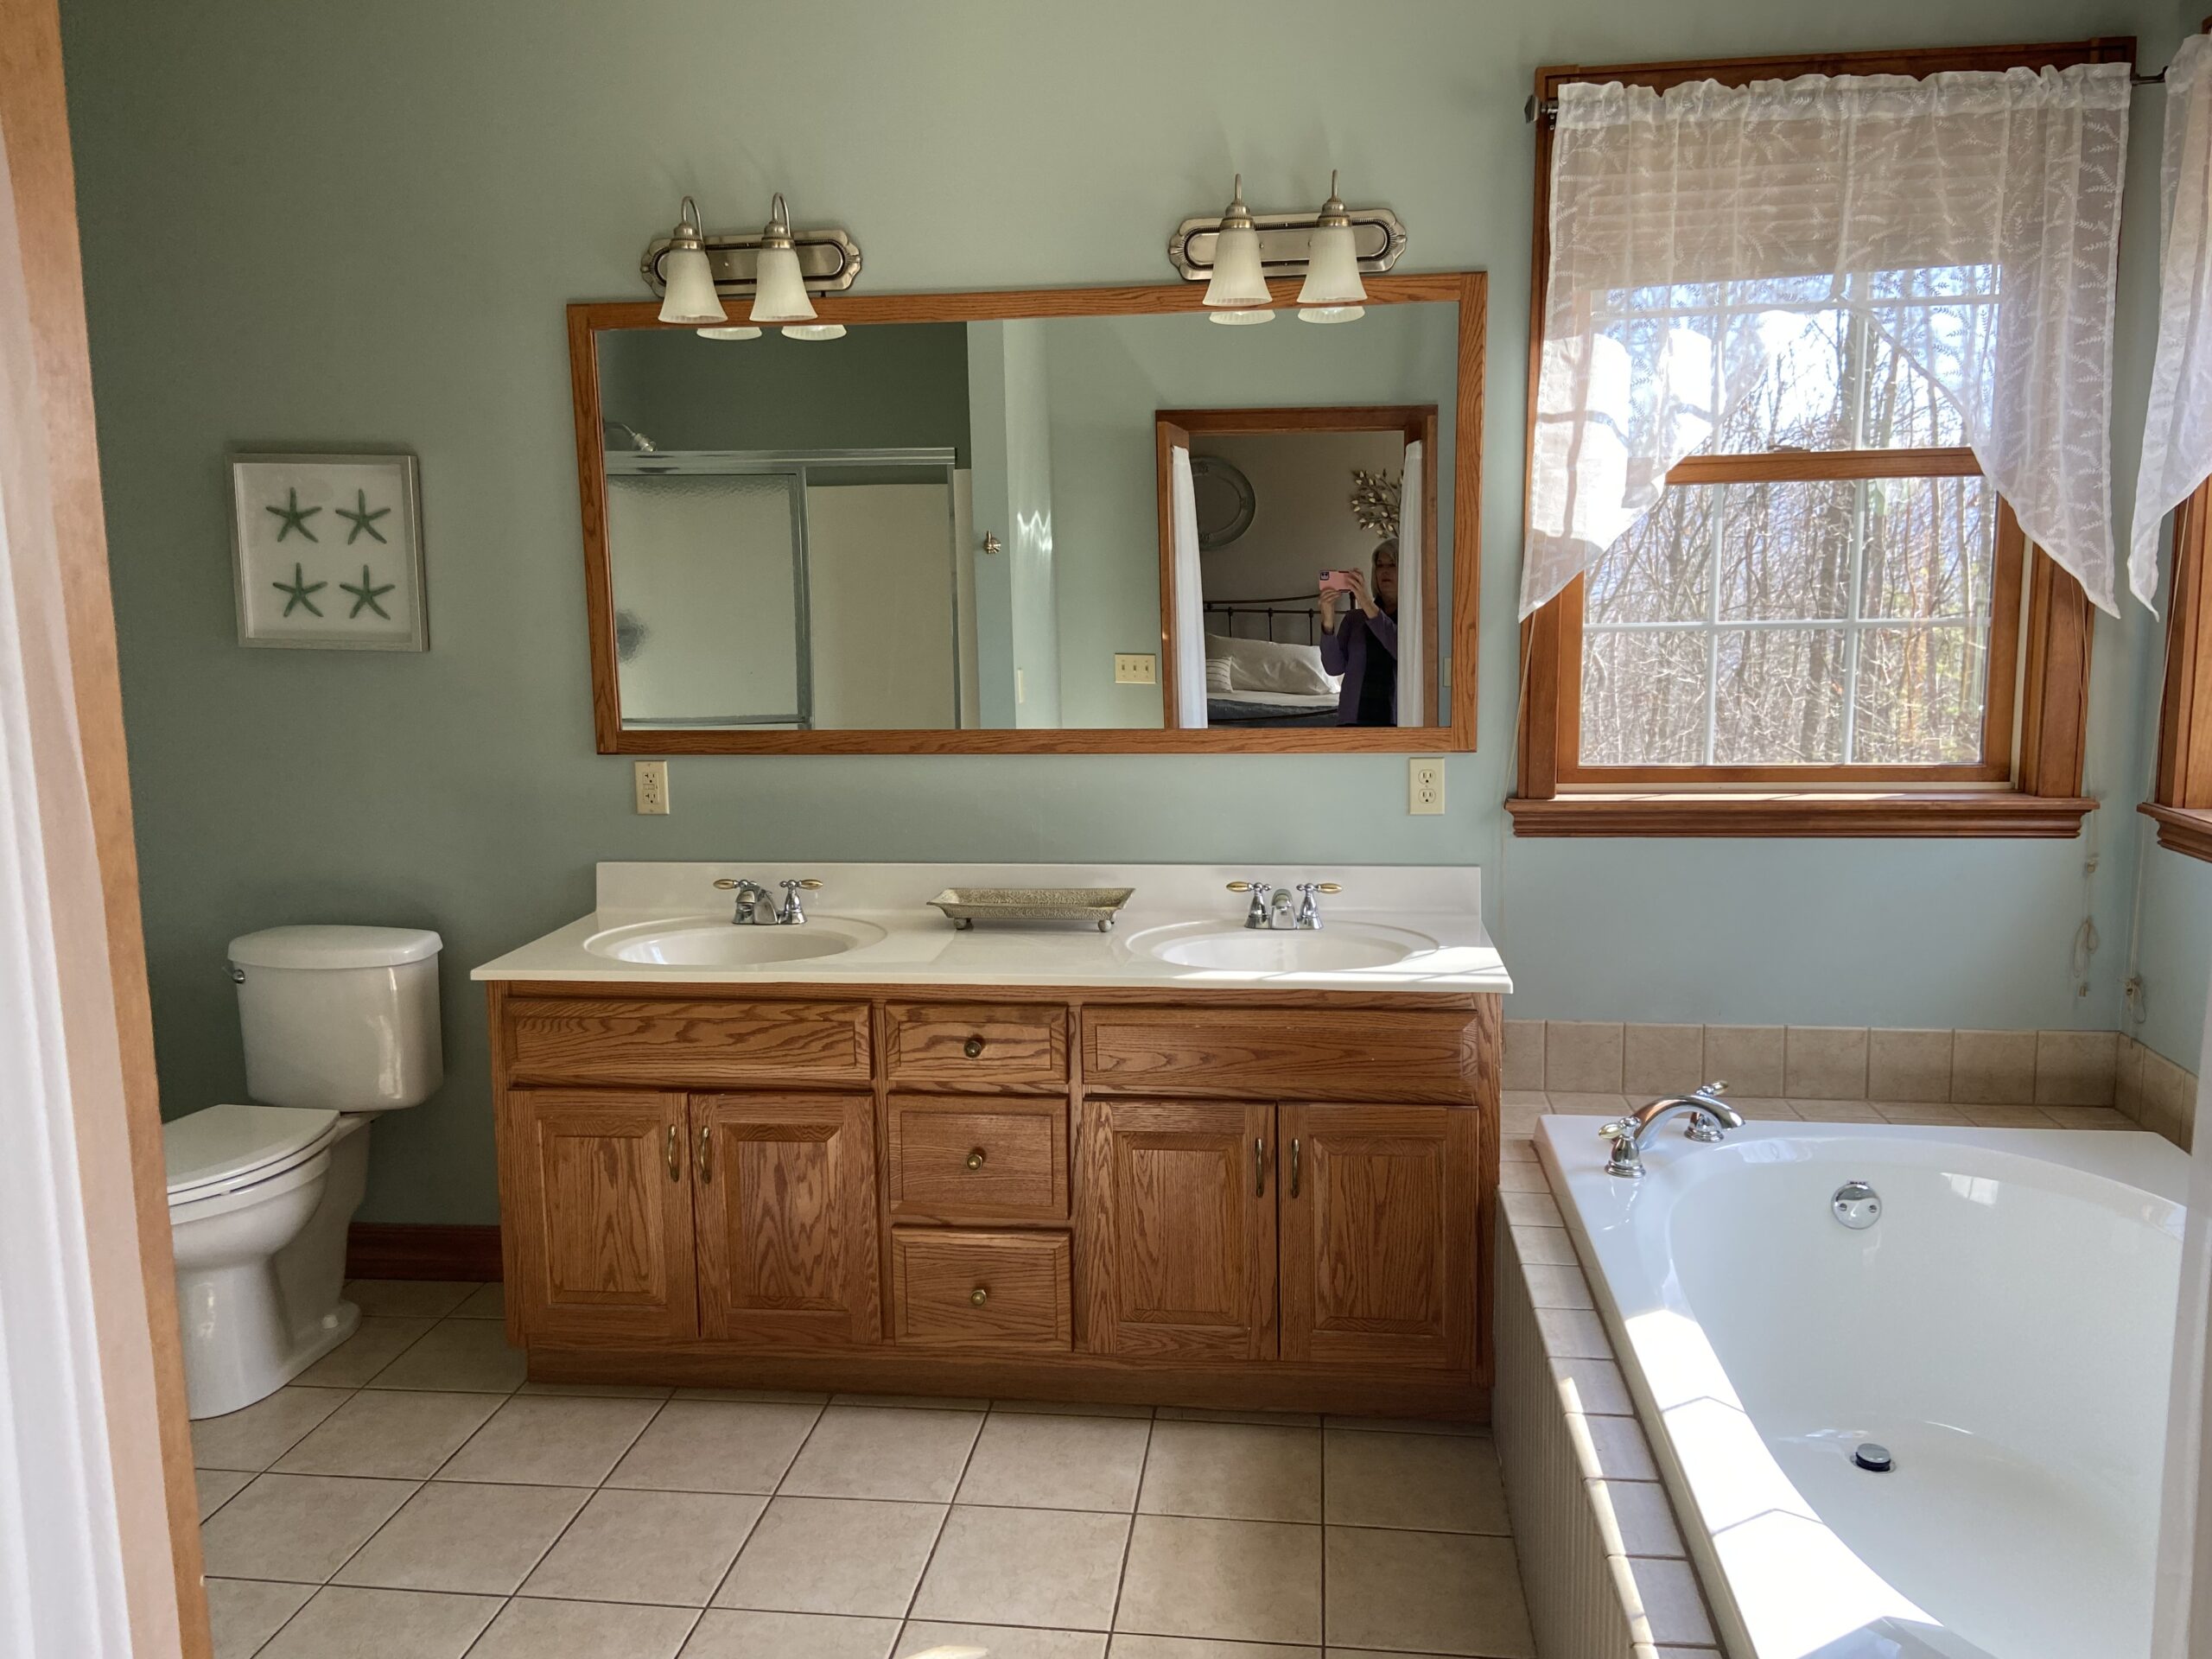 bathroom before update and remodel, tub with tile deck, oak wood vanity and wood trim (3)